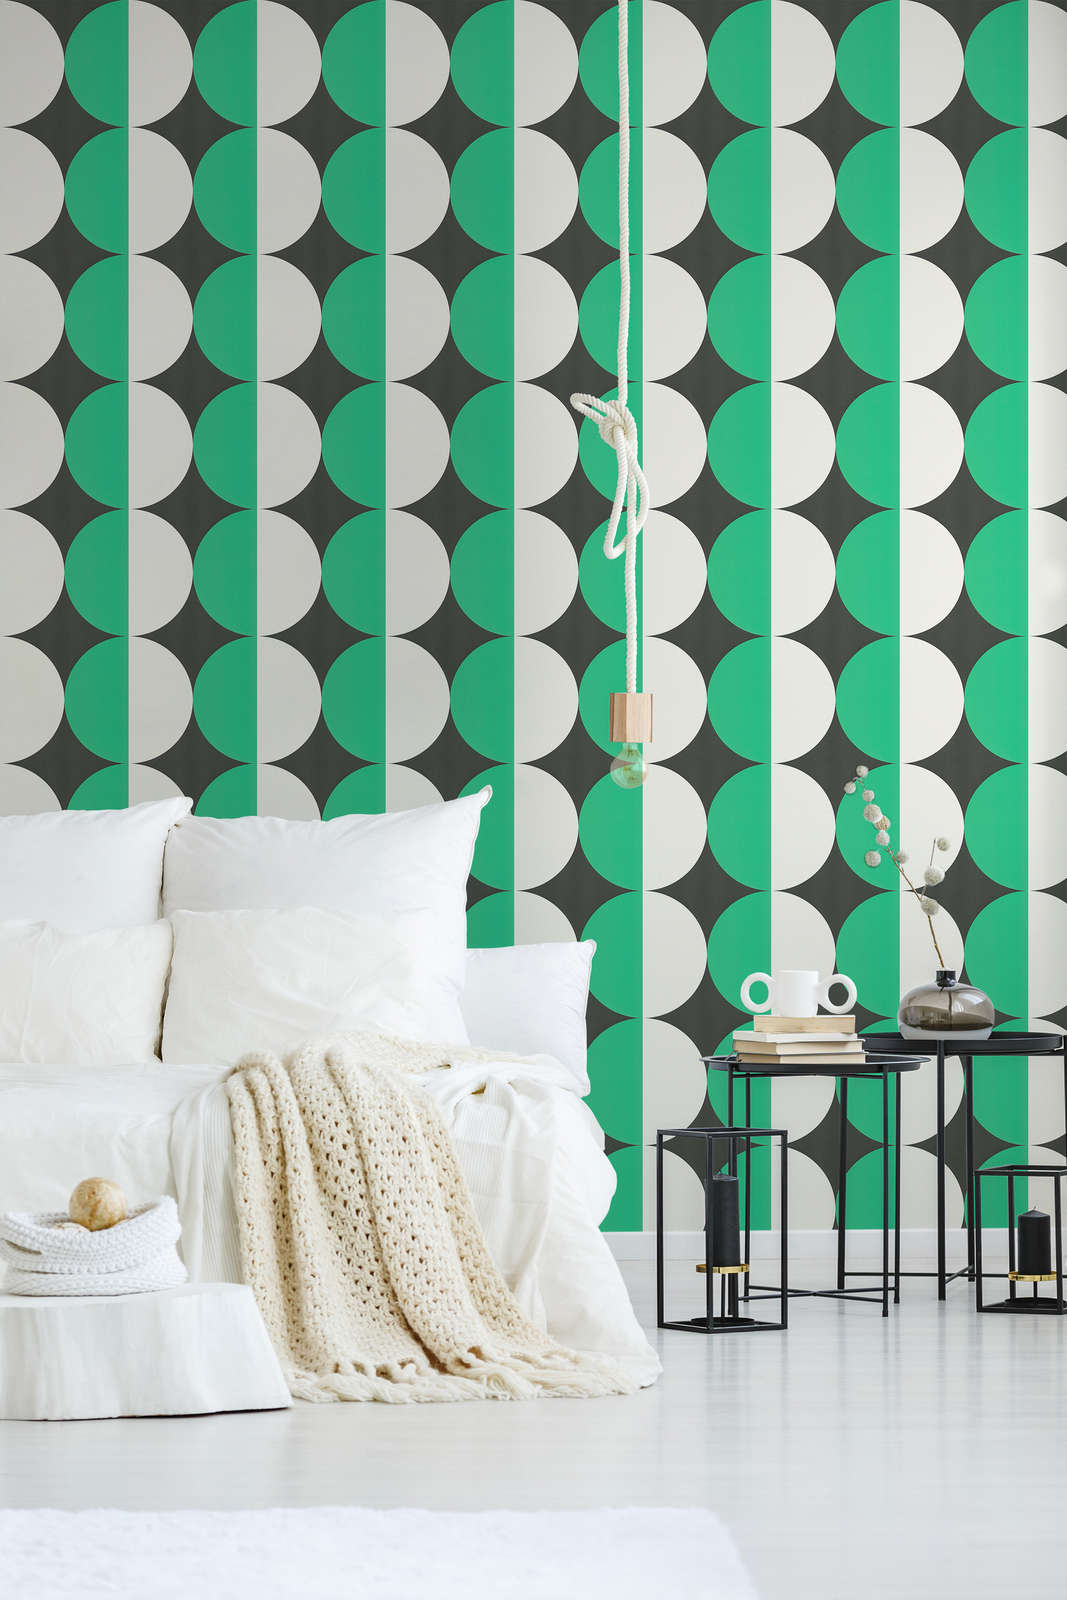             Retro 70s style circle pattern non-woven wallpaper - green, white, black
        